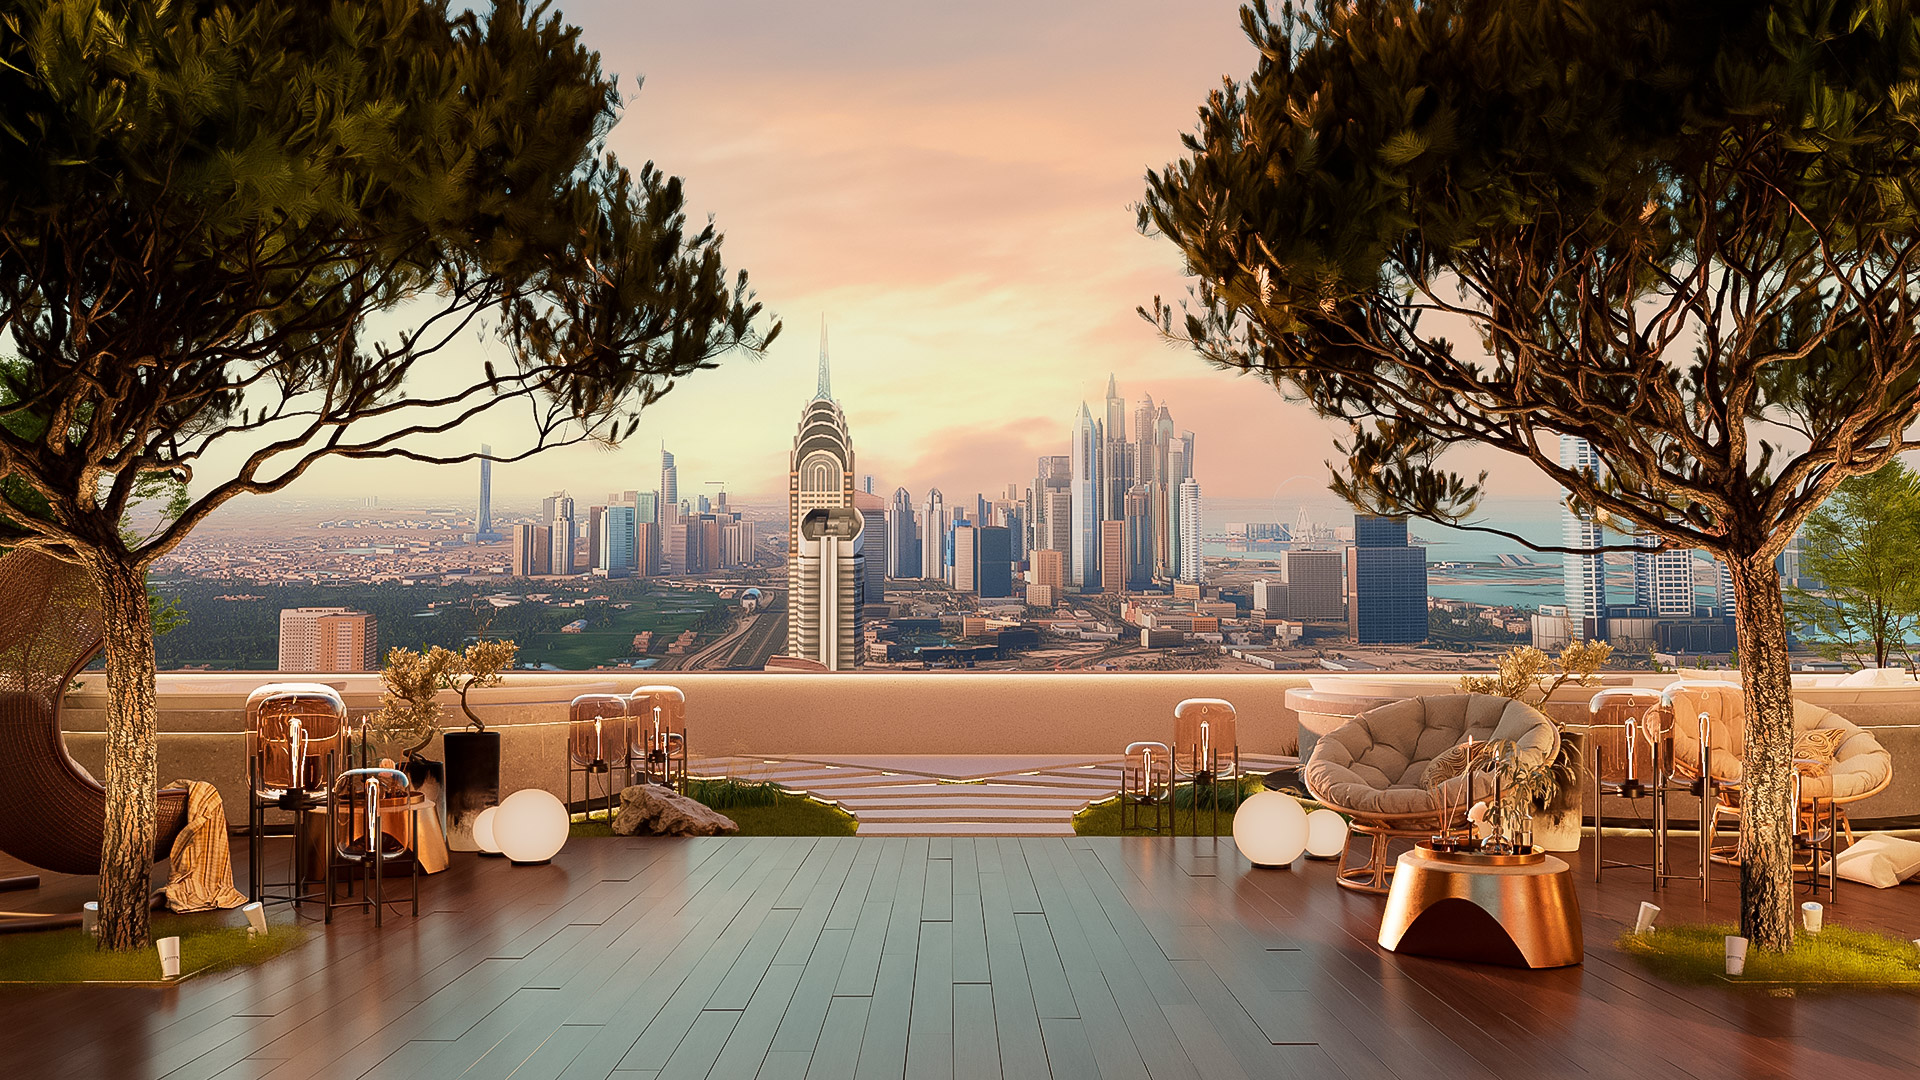 THE BILTMORE RESIDENCES SUFOUH by GJ Properties in Al Sufouh, Dubai - 3